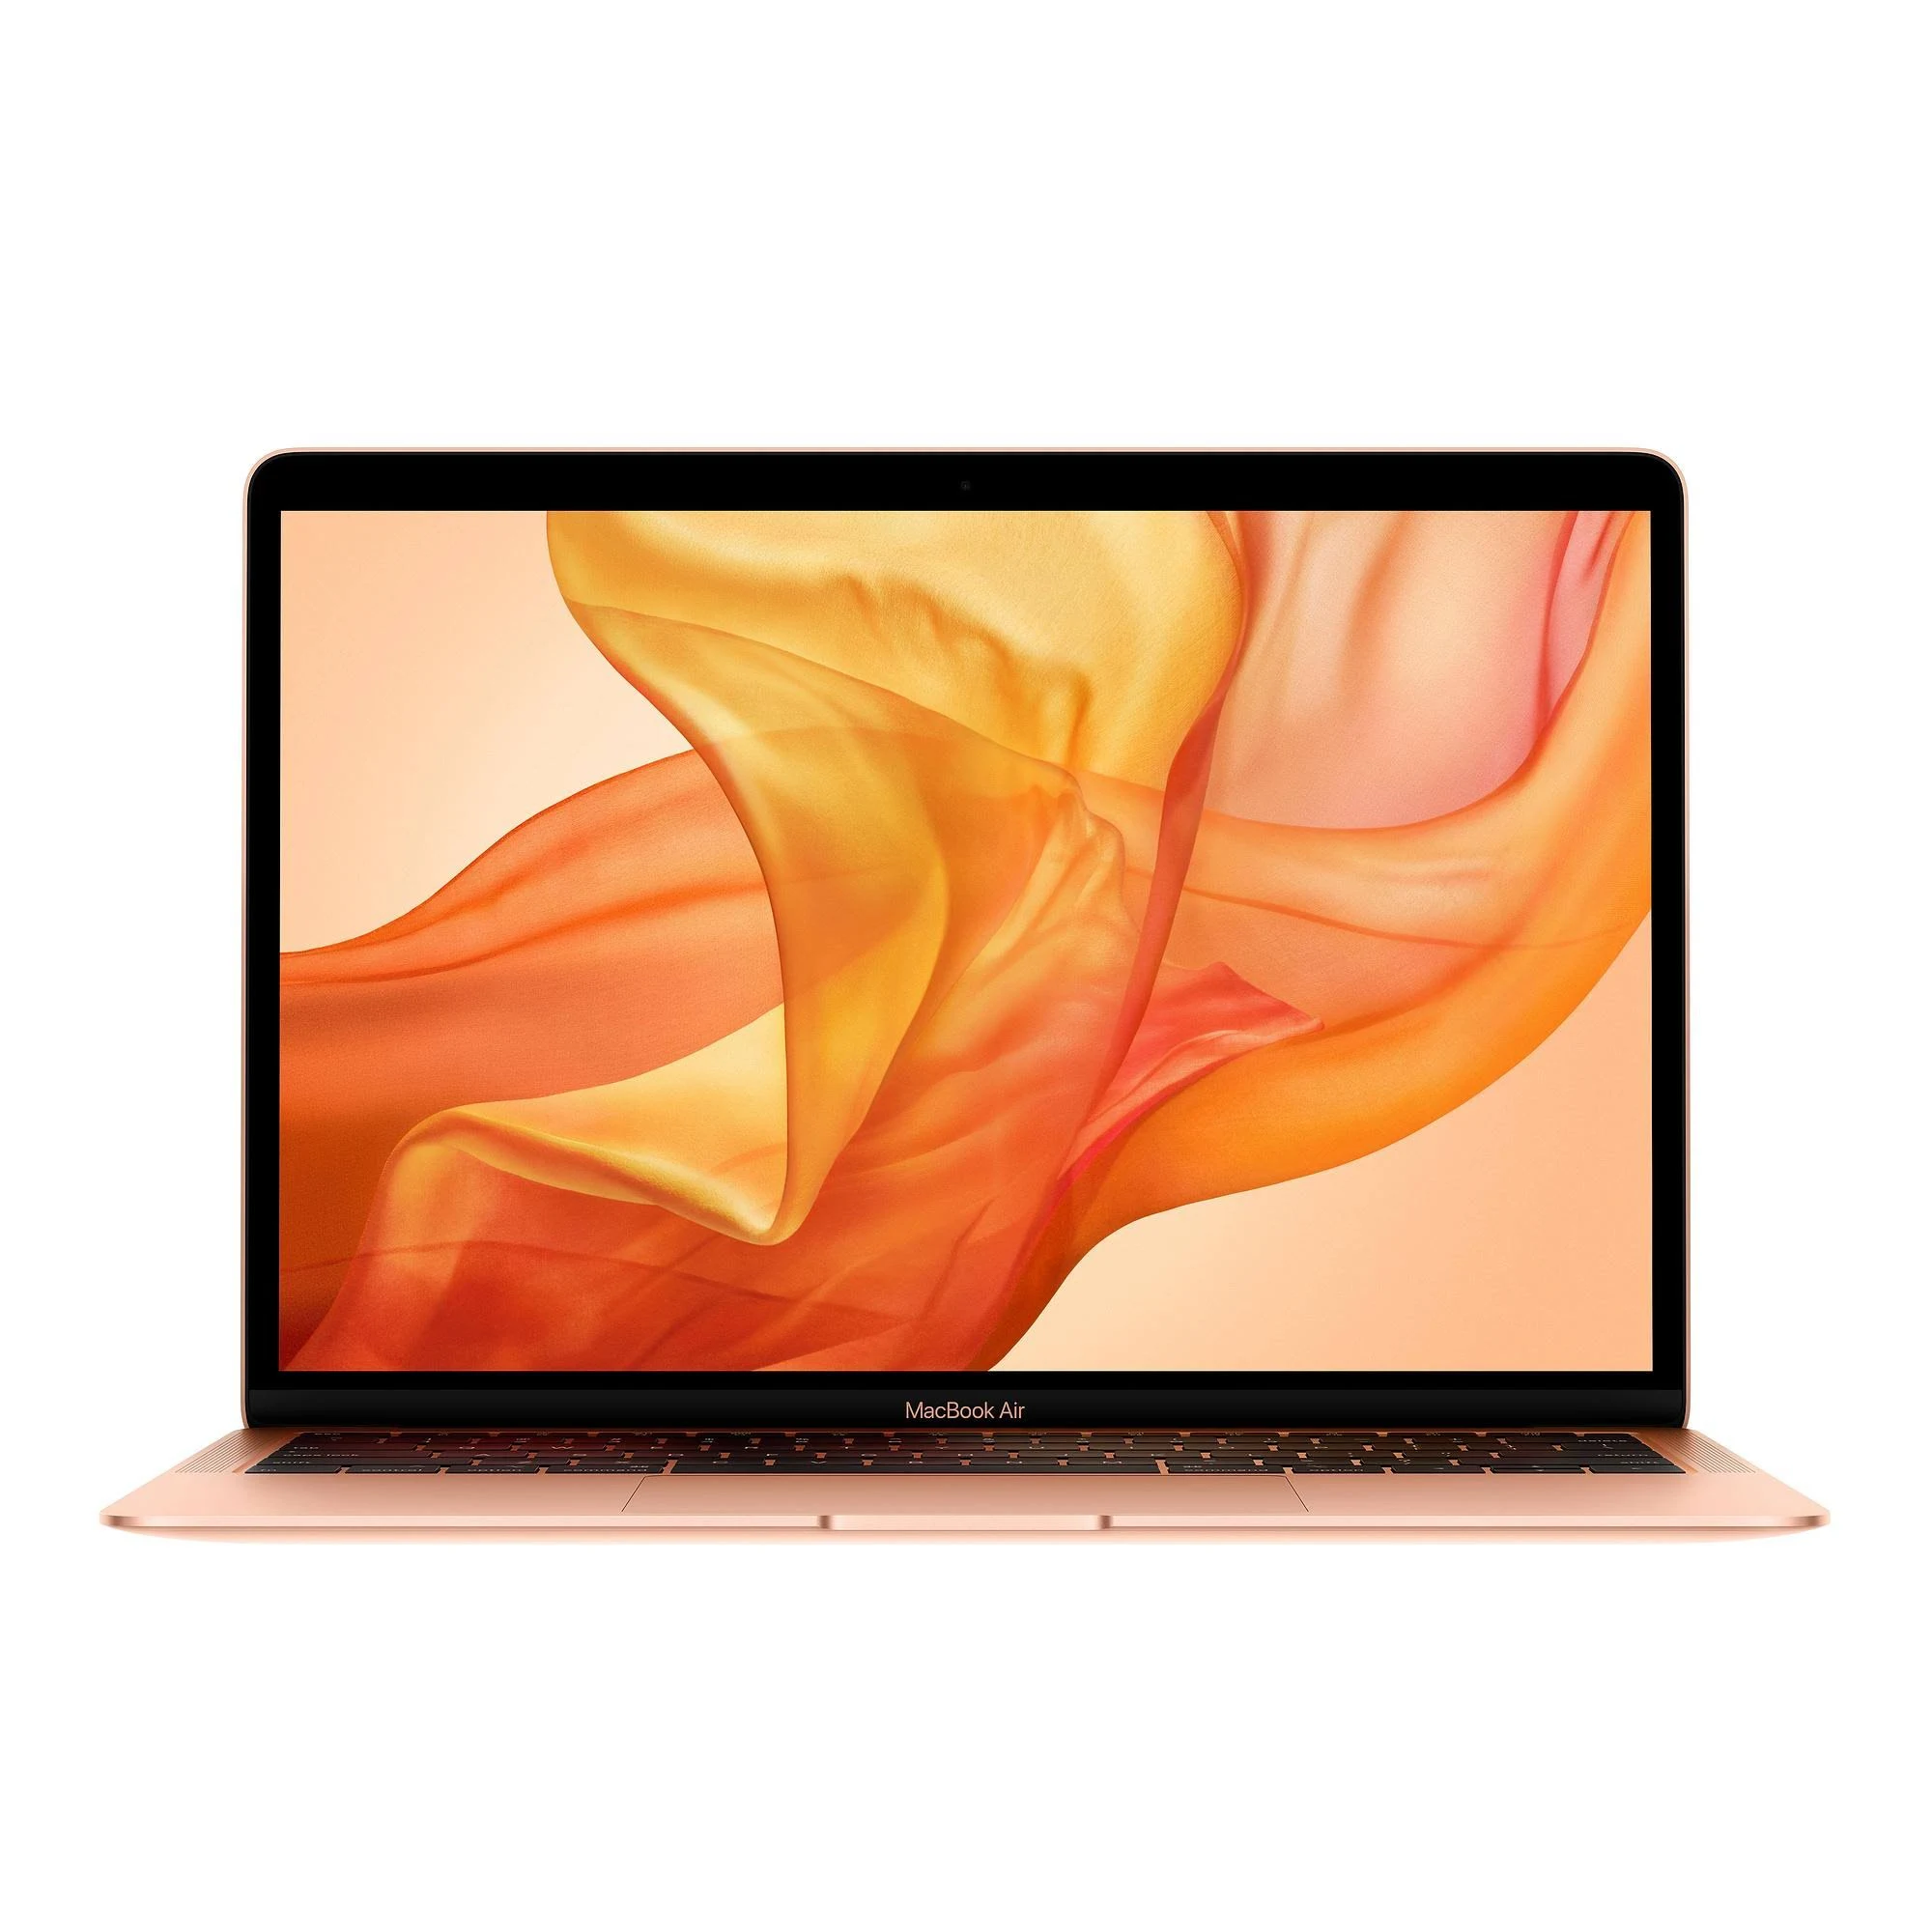 MacBook Air 13 inch True Tone 2019 i5 1.6GHz - 128GB SSD - 16GB Ram 128GB Gold Very Good